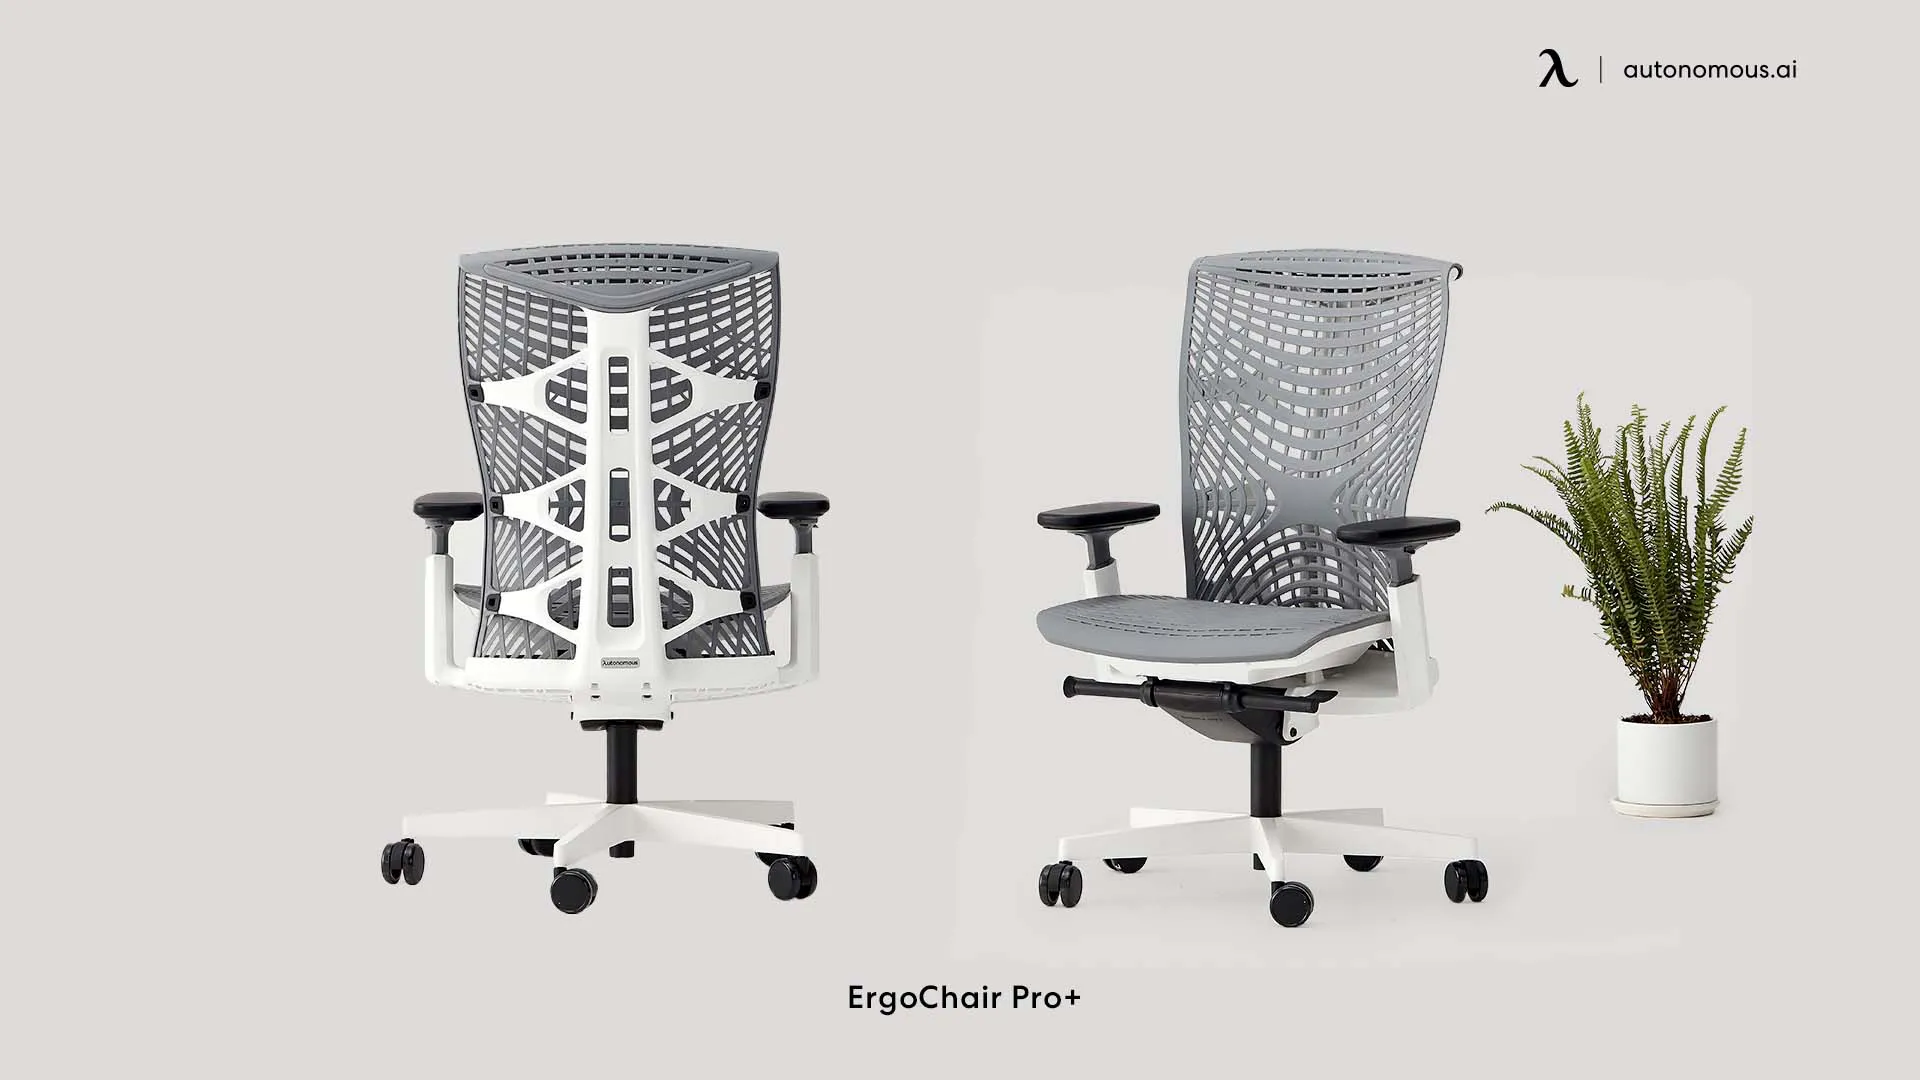 ErgoChair Pro+ big and tall chair